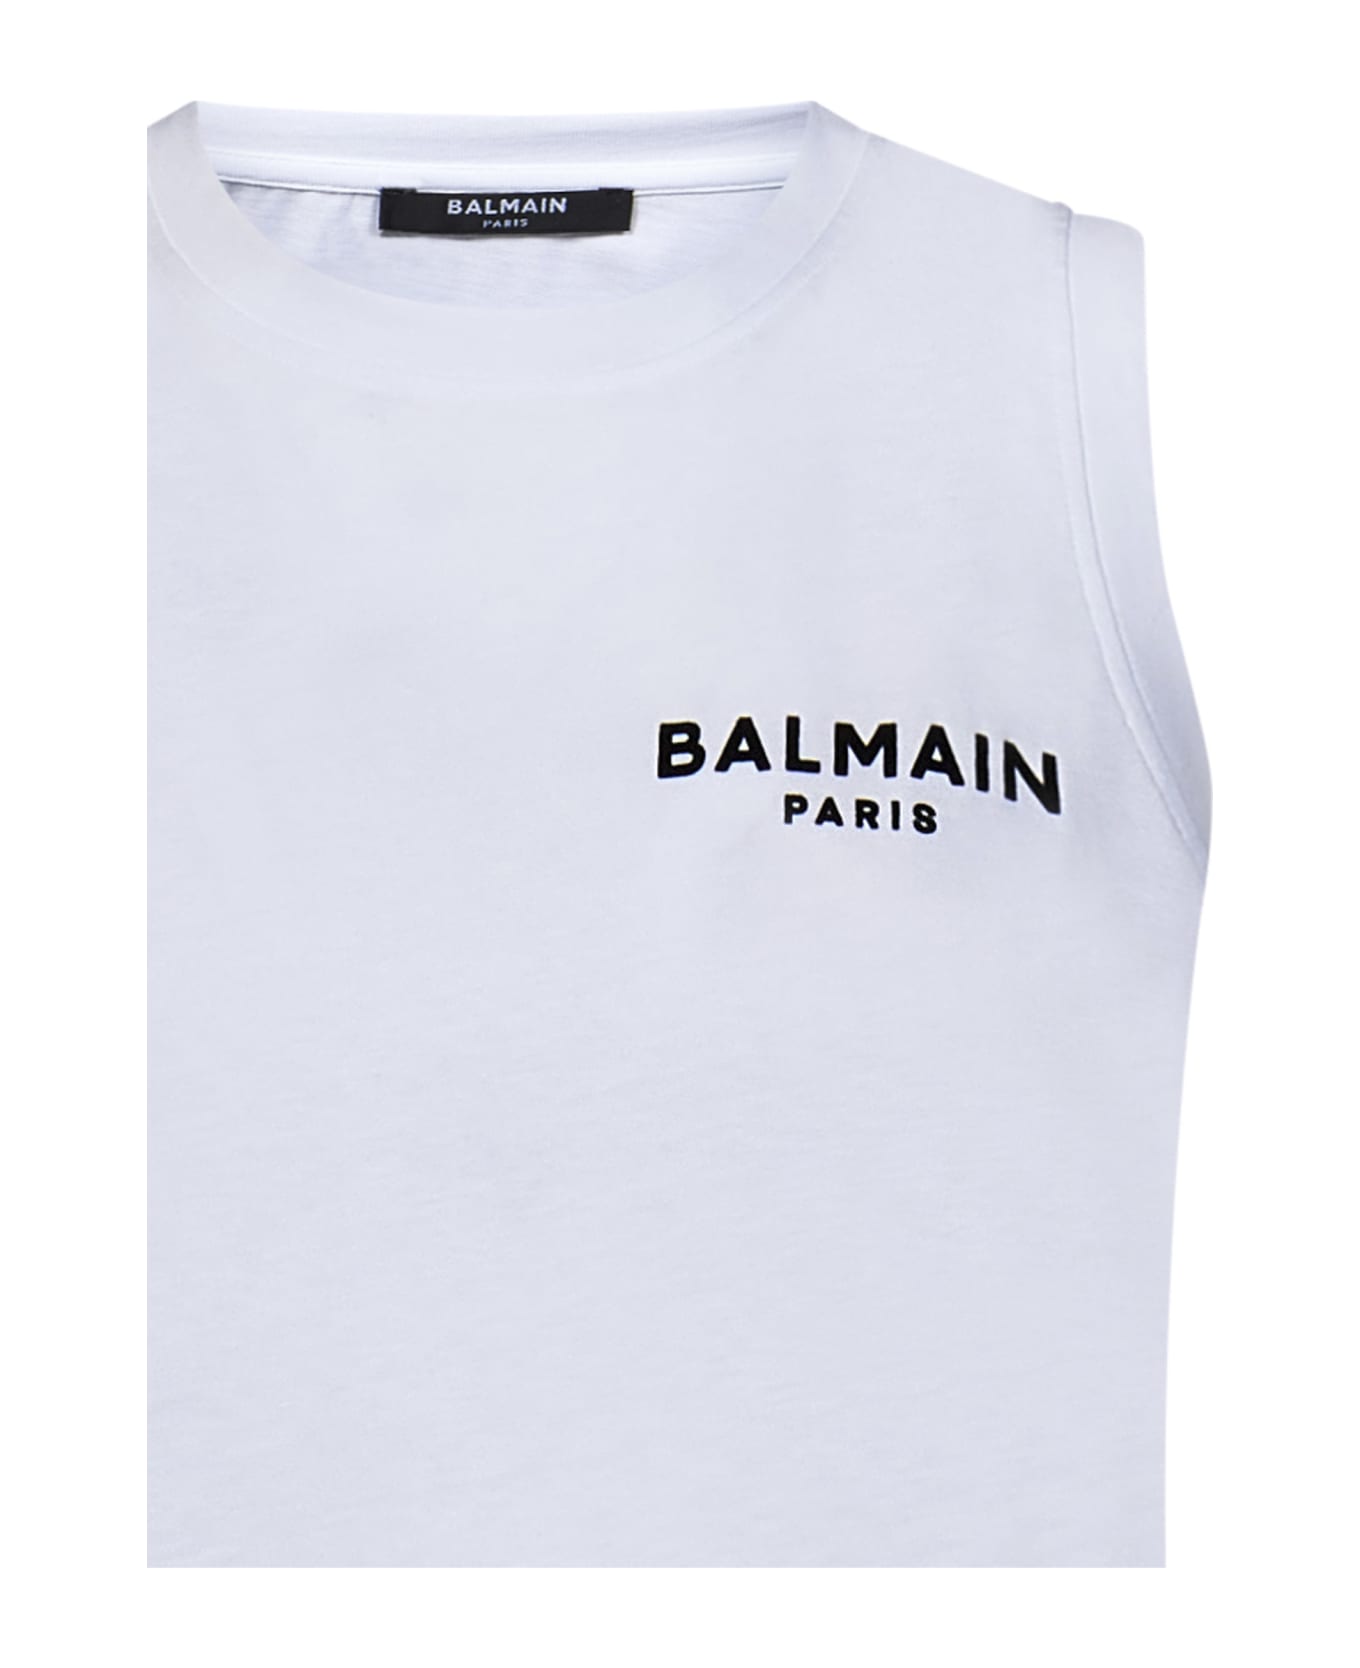 Balmain Paris Tank Top - White